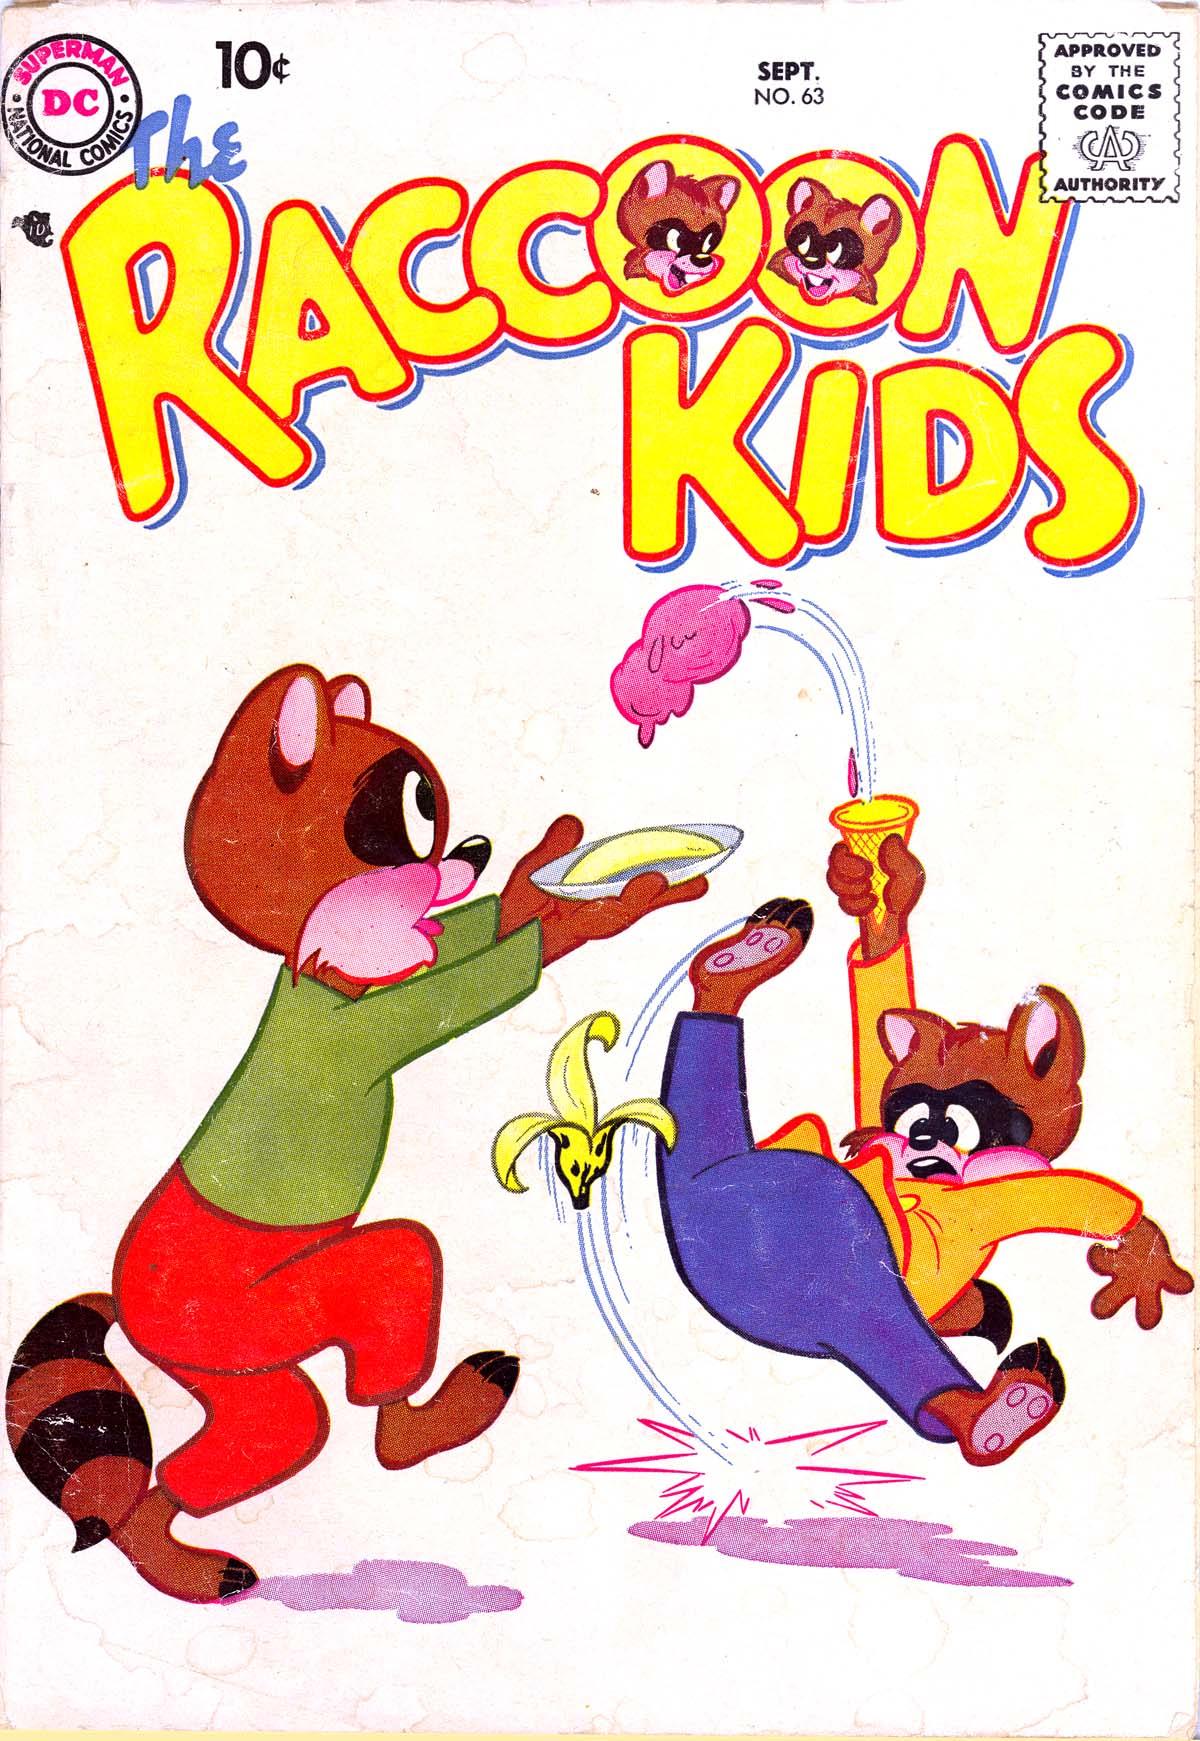 Raccoon Kids Vol. 1 #63